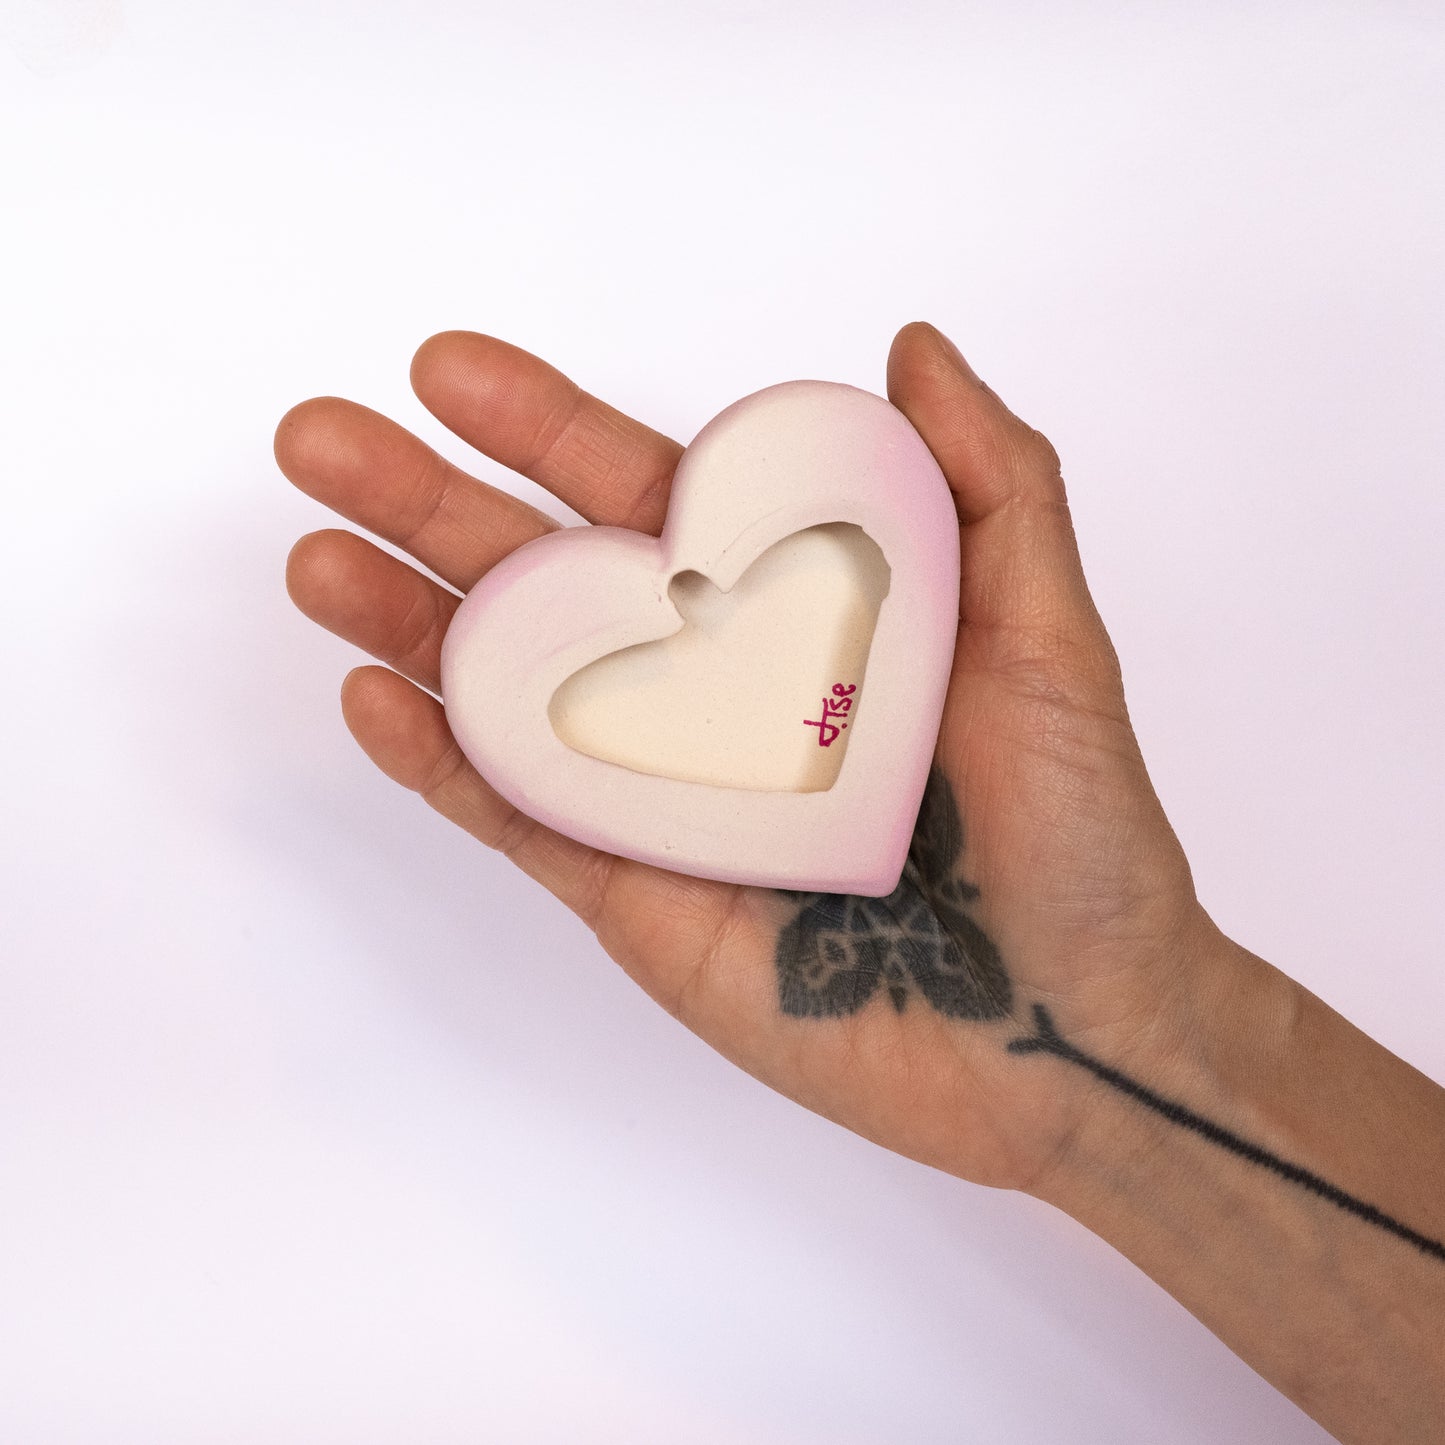 "I Heart U" Ceramic Conversational Heart